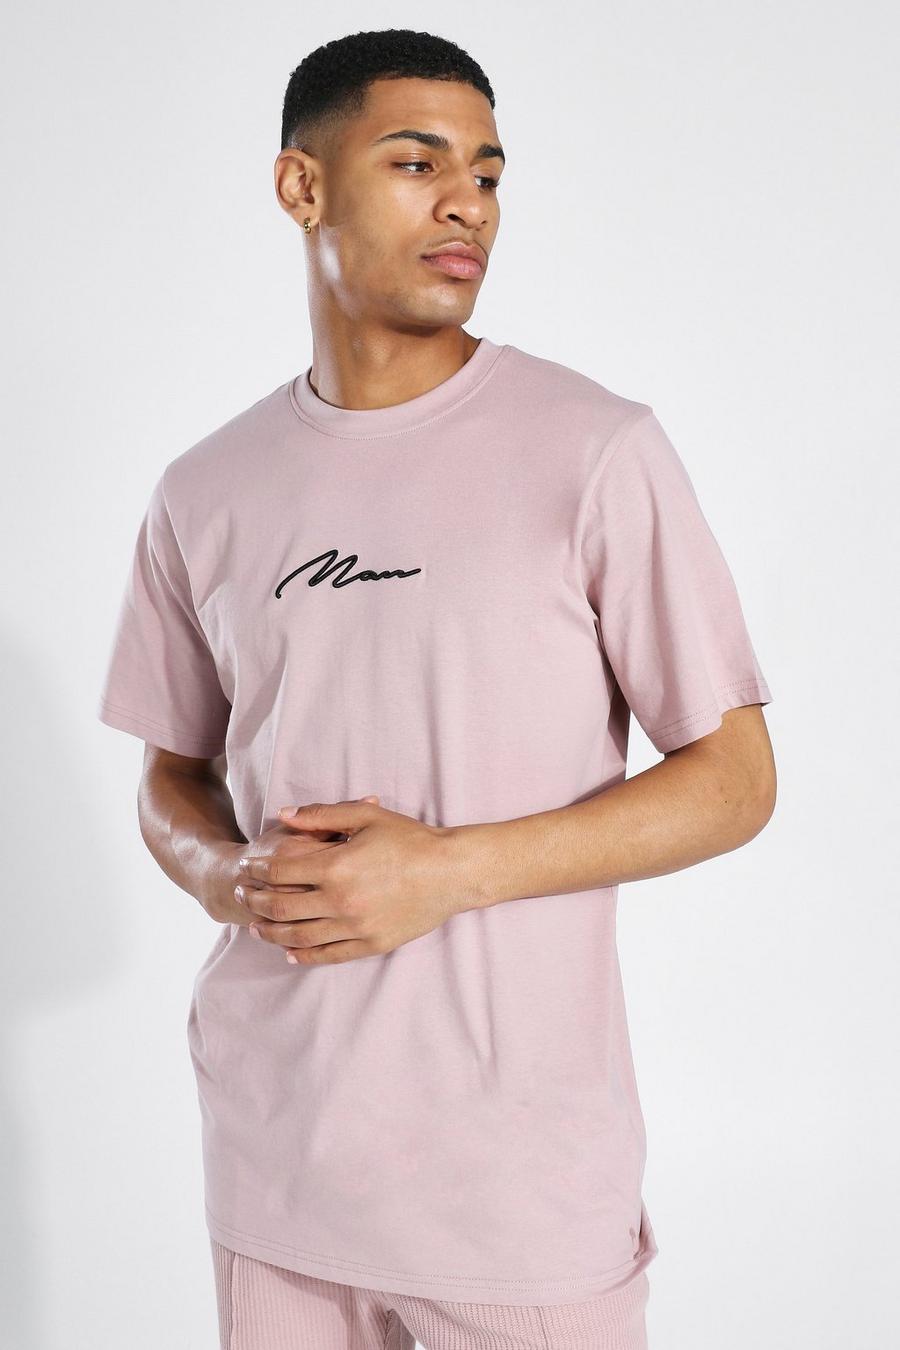 T-shirt lunga con firma Man, Color corteccia image number 1